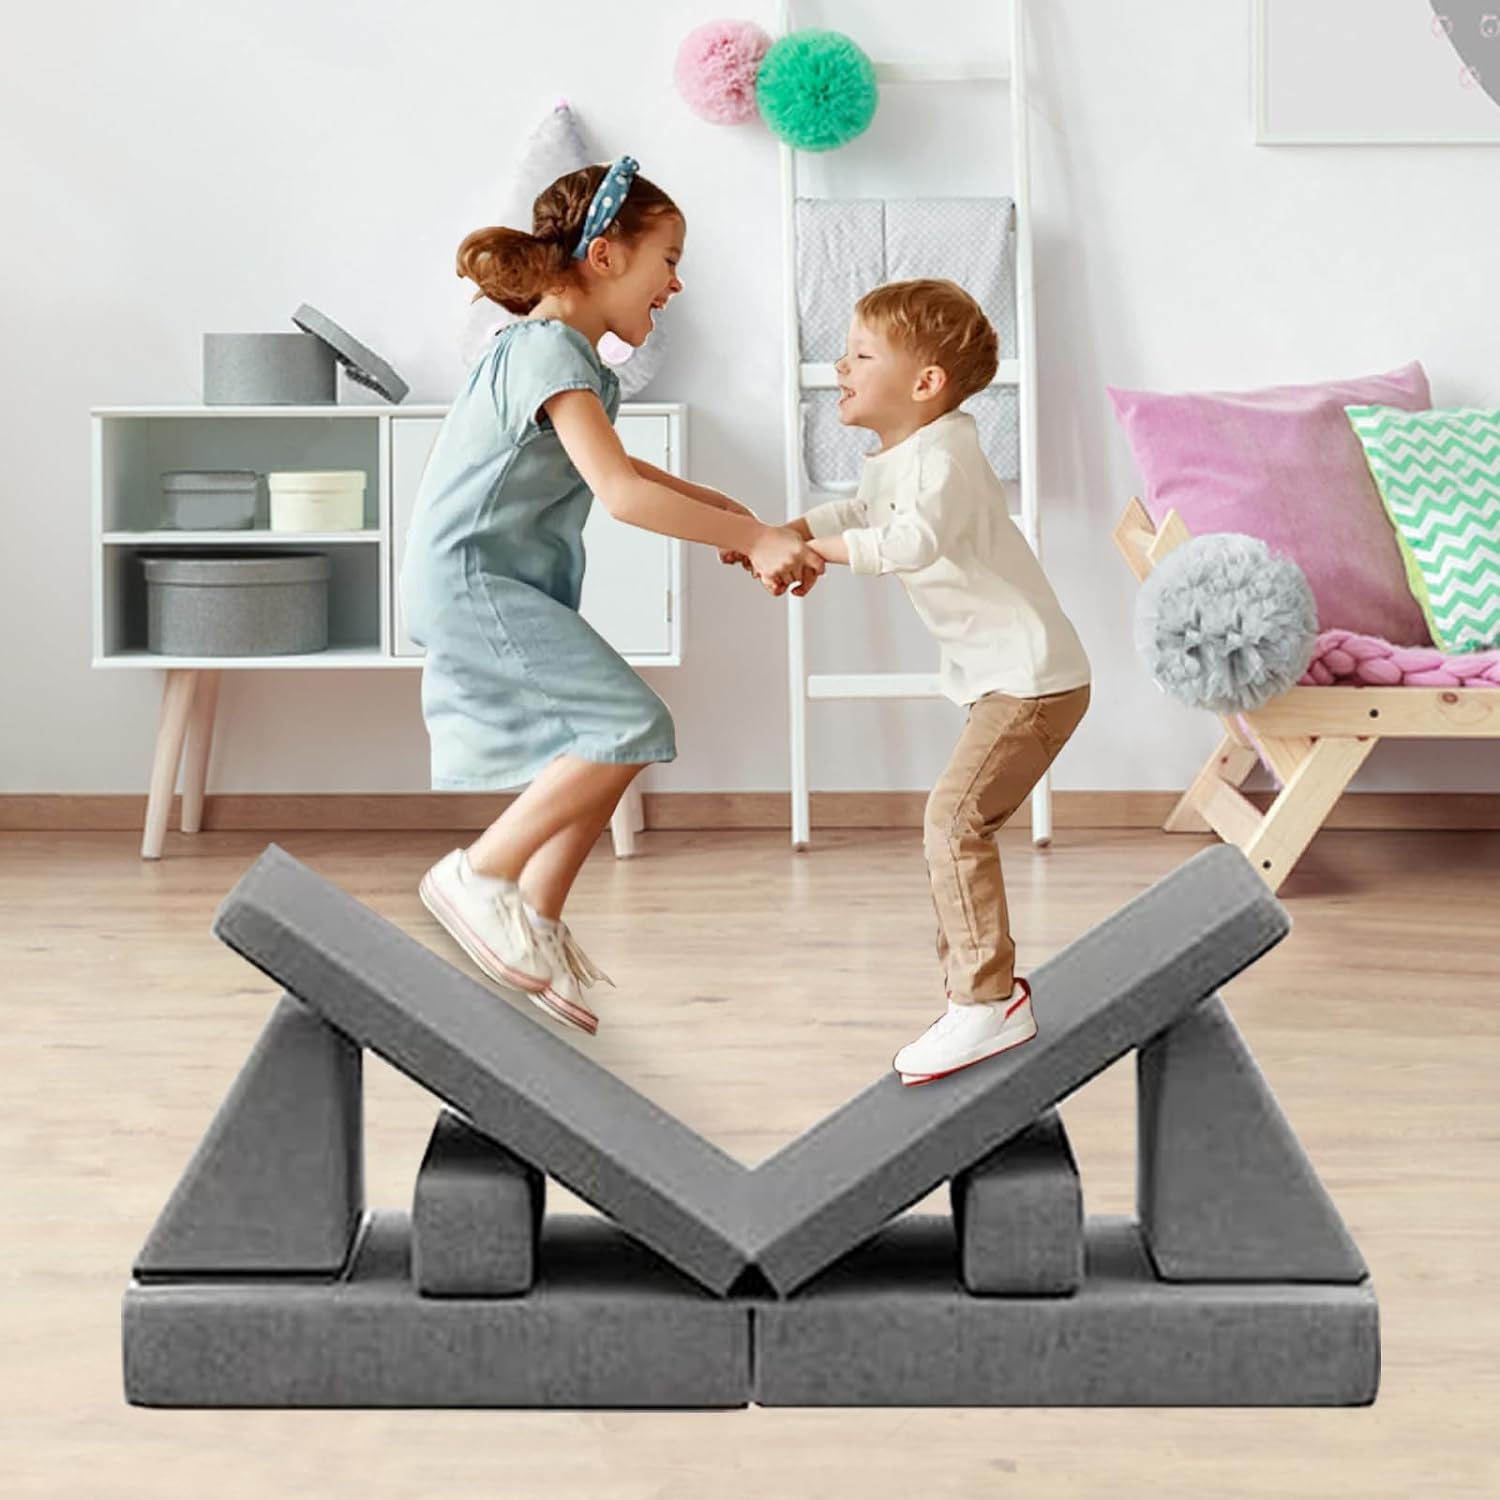 Modular Play Couch Sofa for Kids Imaginative Furniture Set Creative